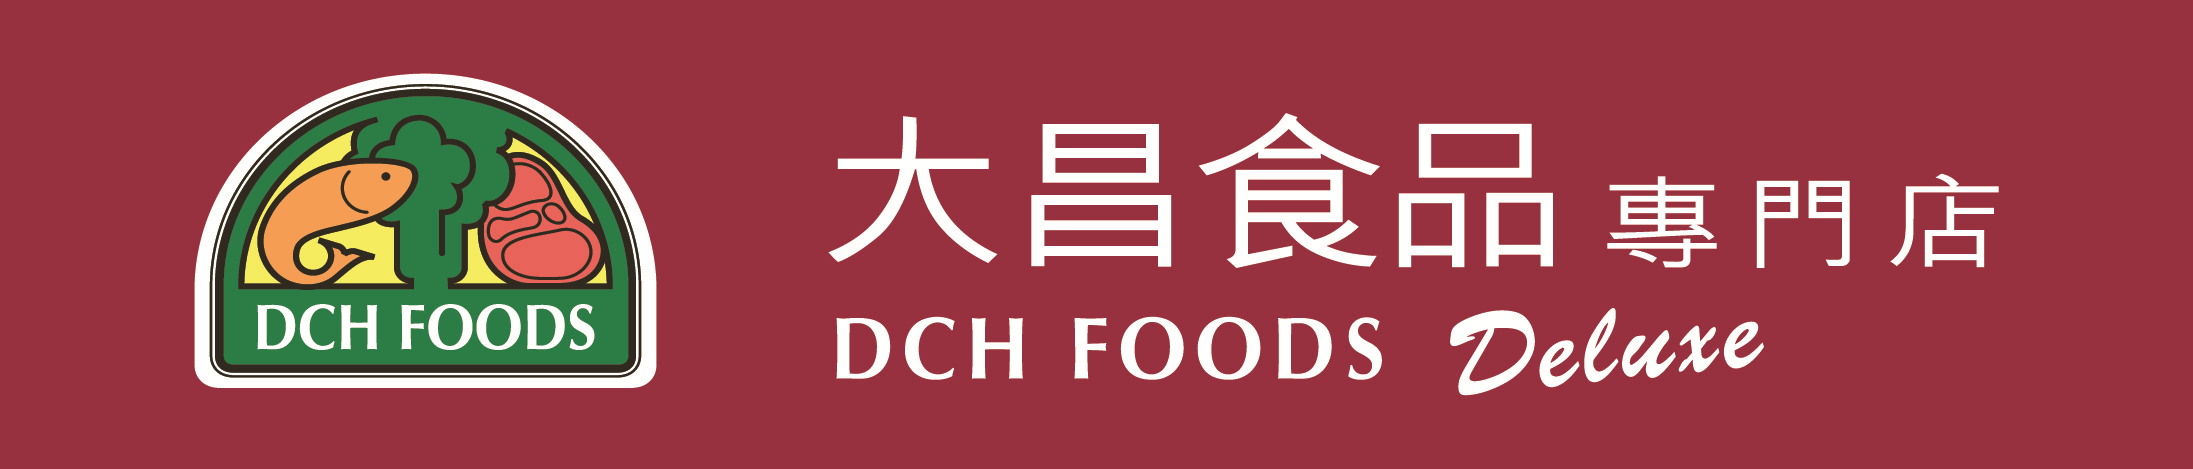 food scheme 2019 gold DCH FoodMart